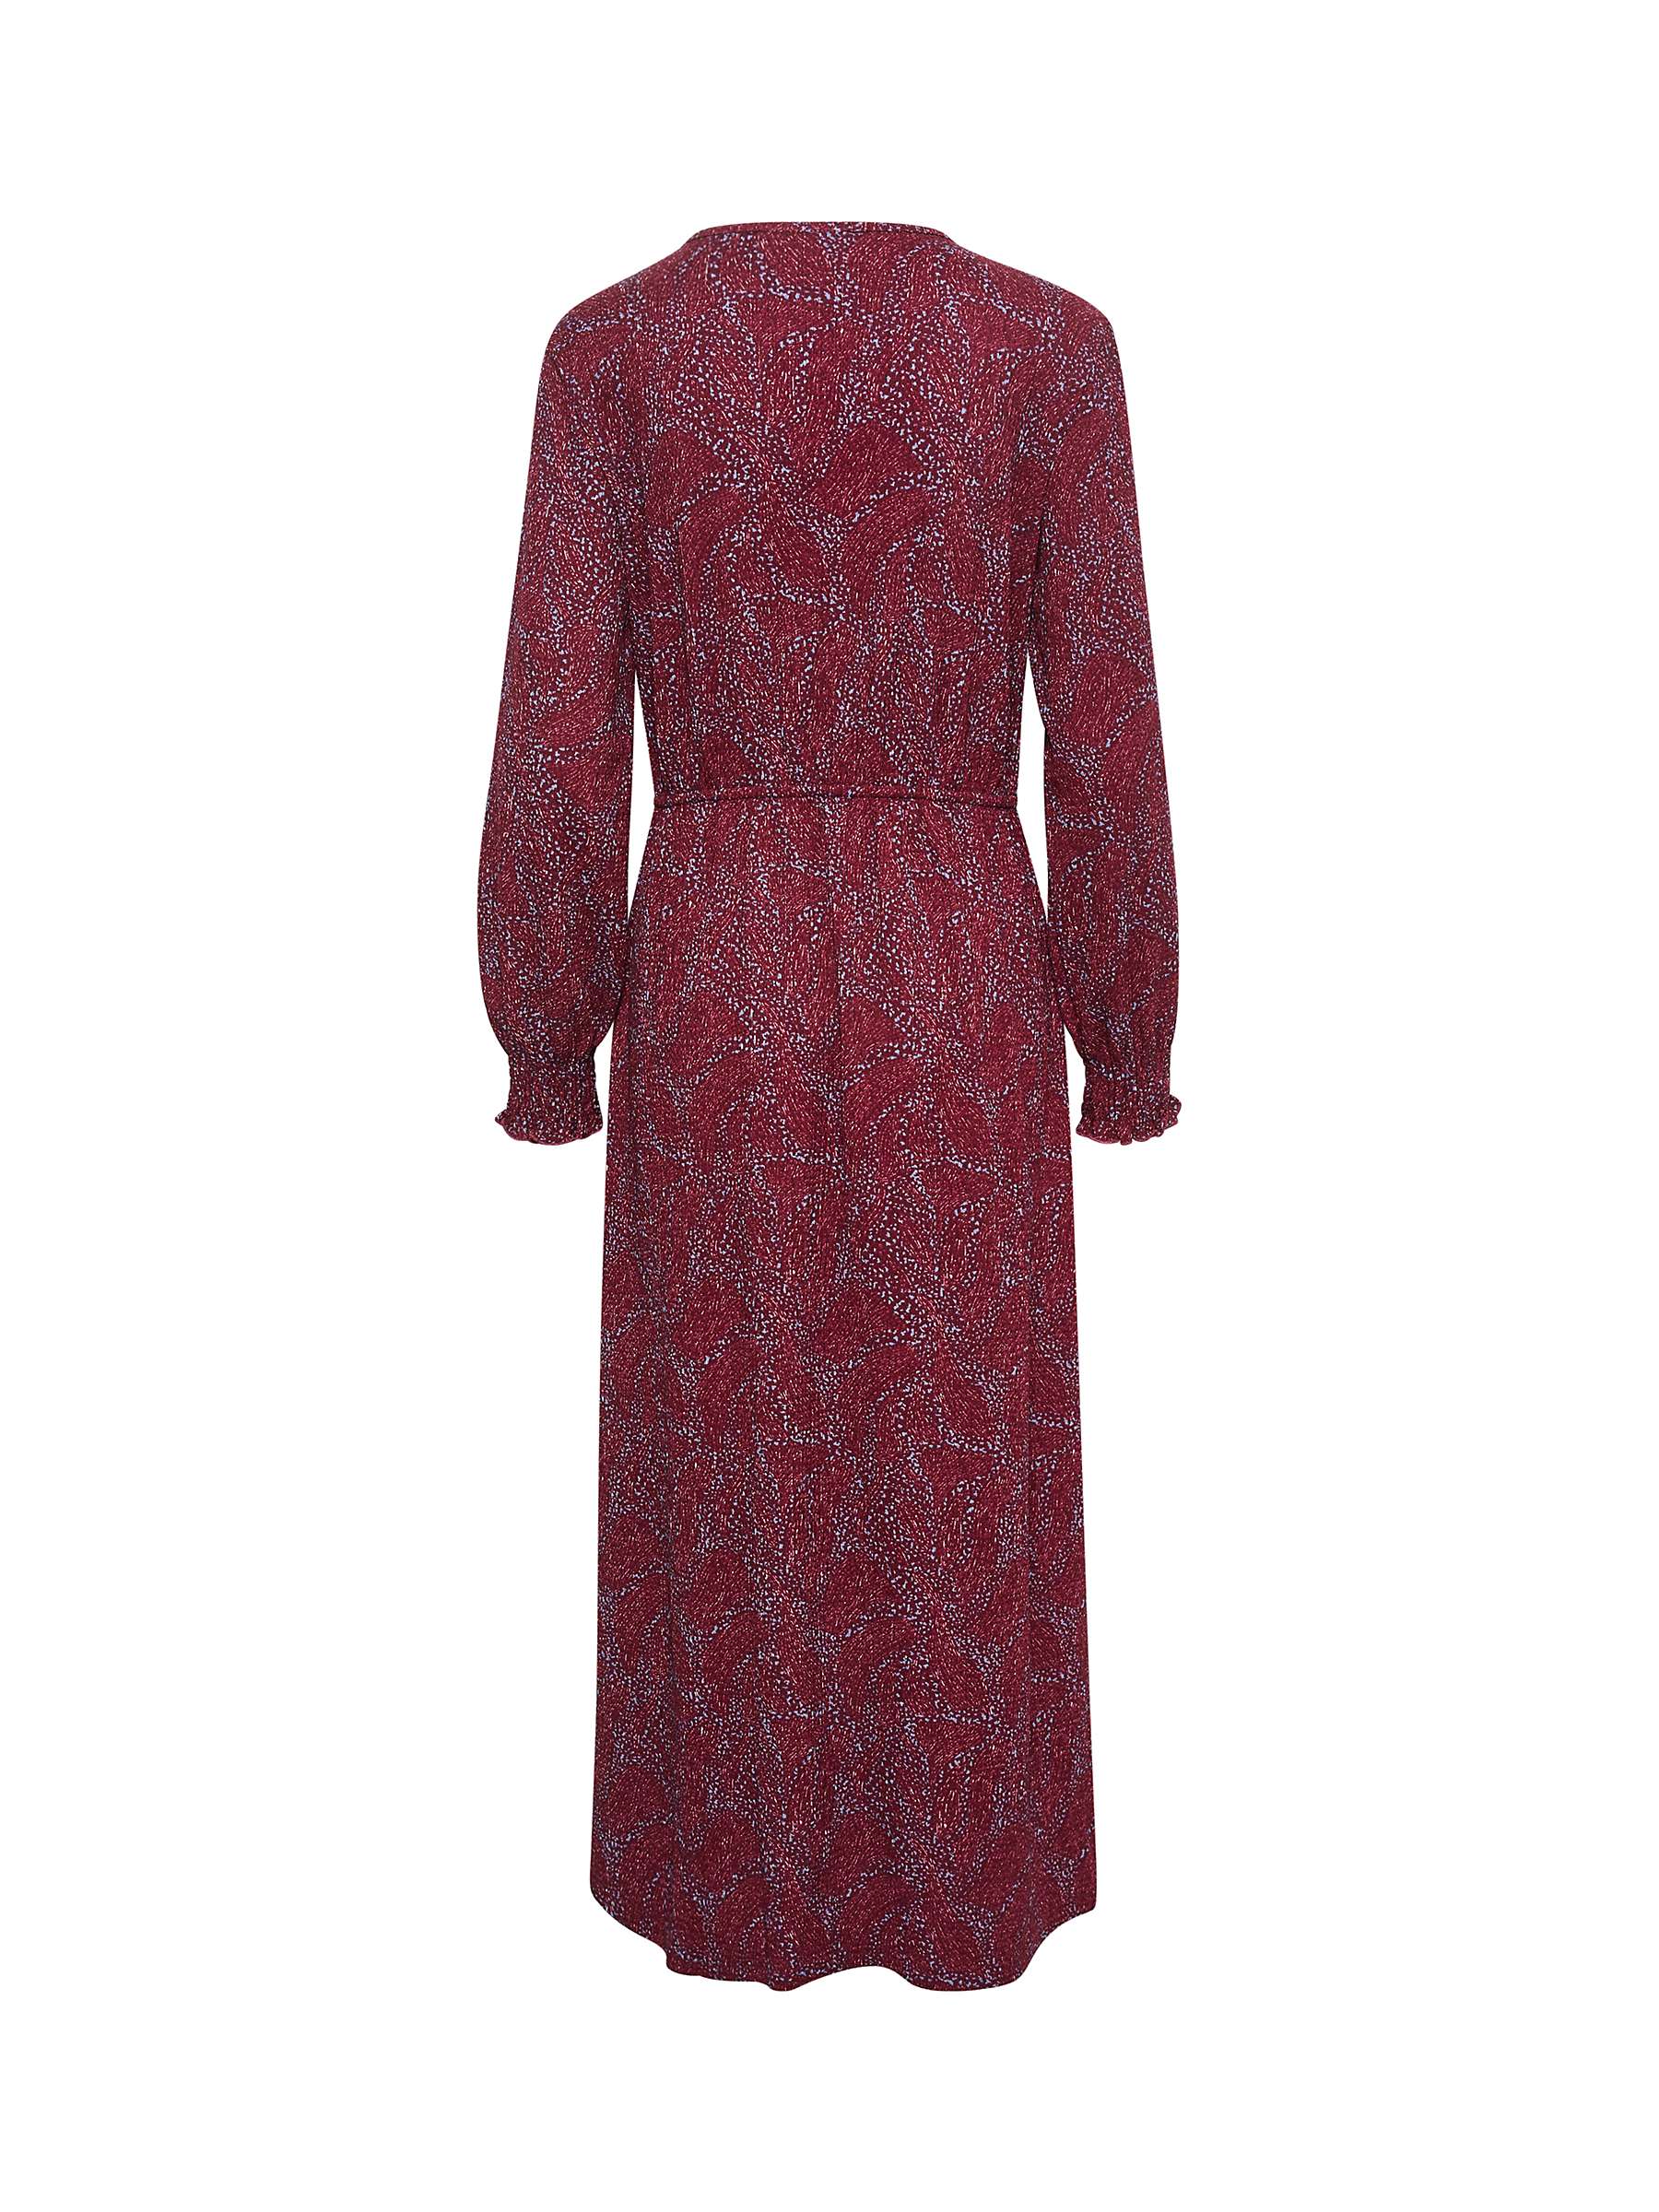 Saint Tropez Averie Abstract Print Maxi Dress, Red/Multi at John Lewis ...